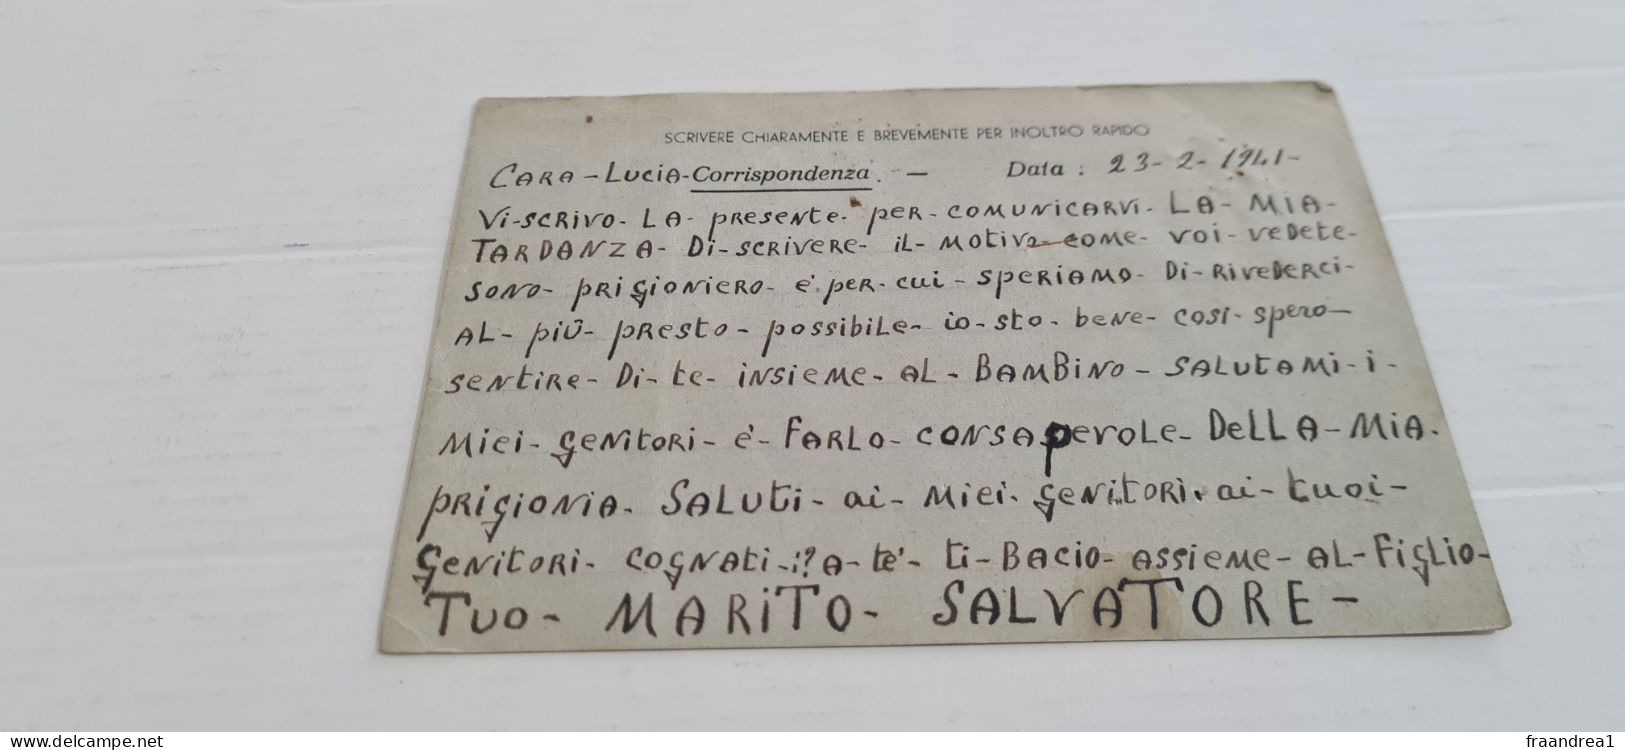 WWII POW 1941 Camp  EGITTO  . CROCE ROSSAFranchigia Posta Militare  Prisoner Of War POW Postcard LOCOROTONDO  BARI - Guerre 1939-45